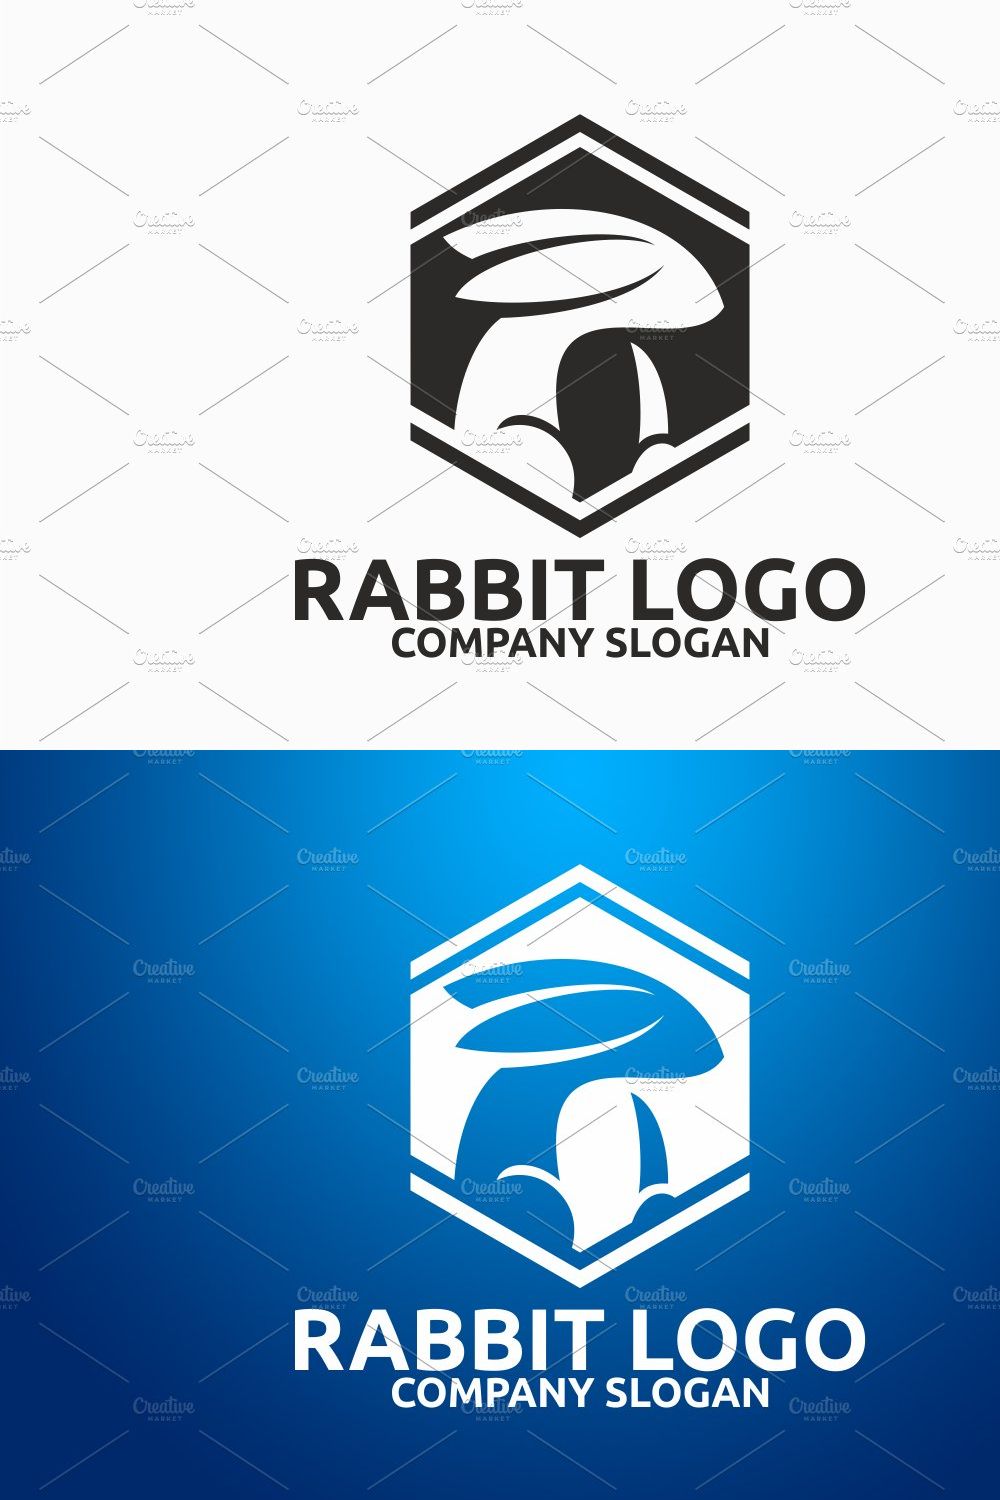 Rabbit Logo pinterest preview image.